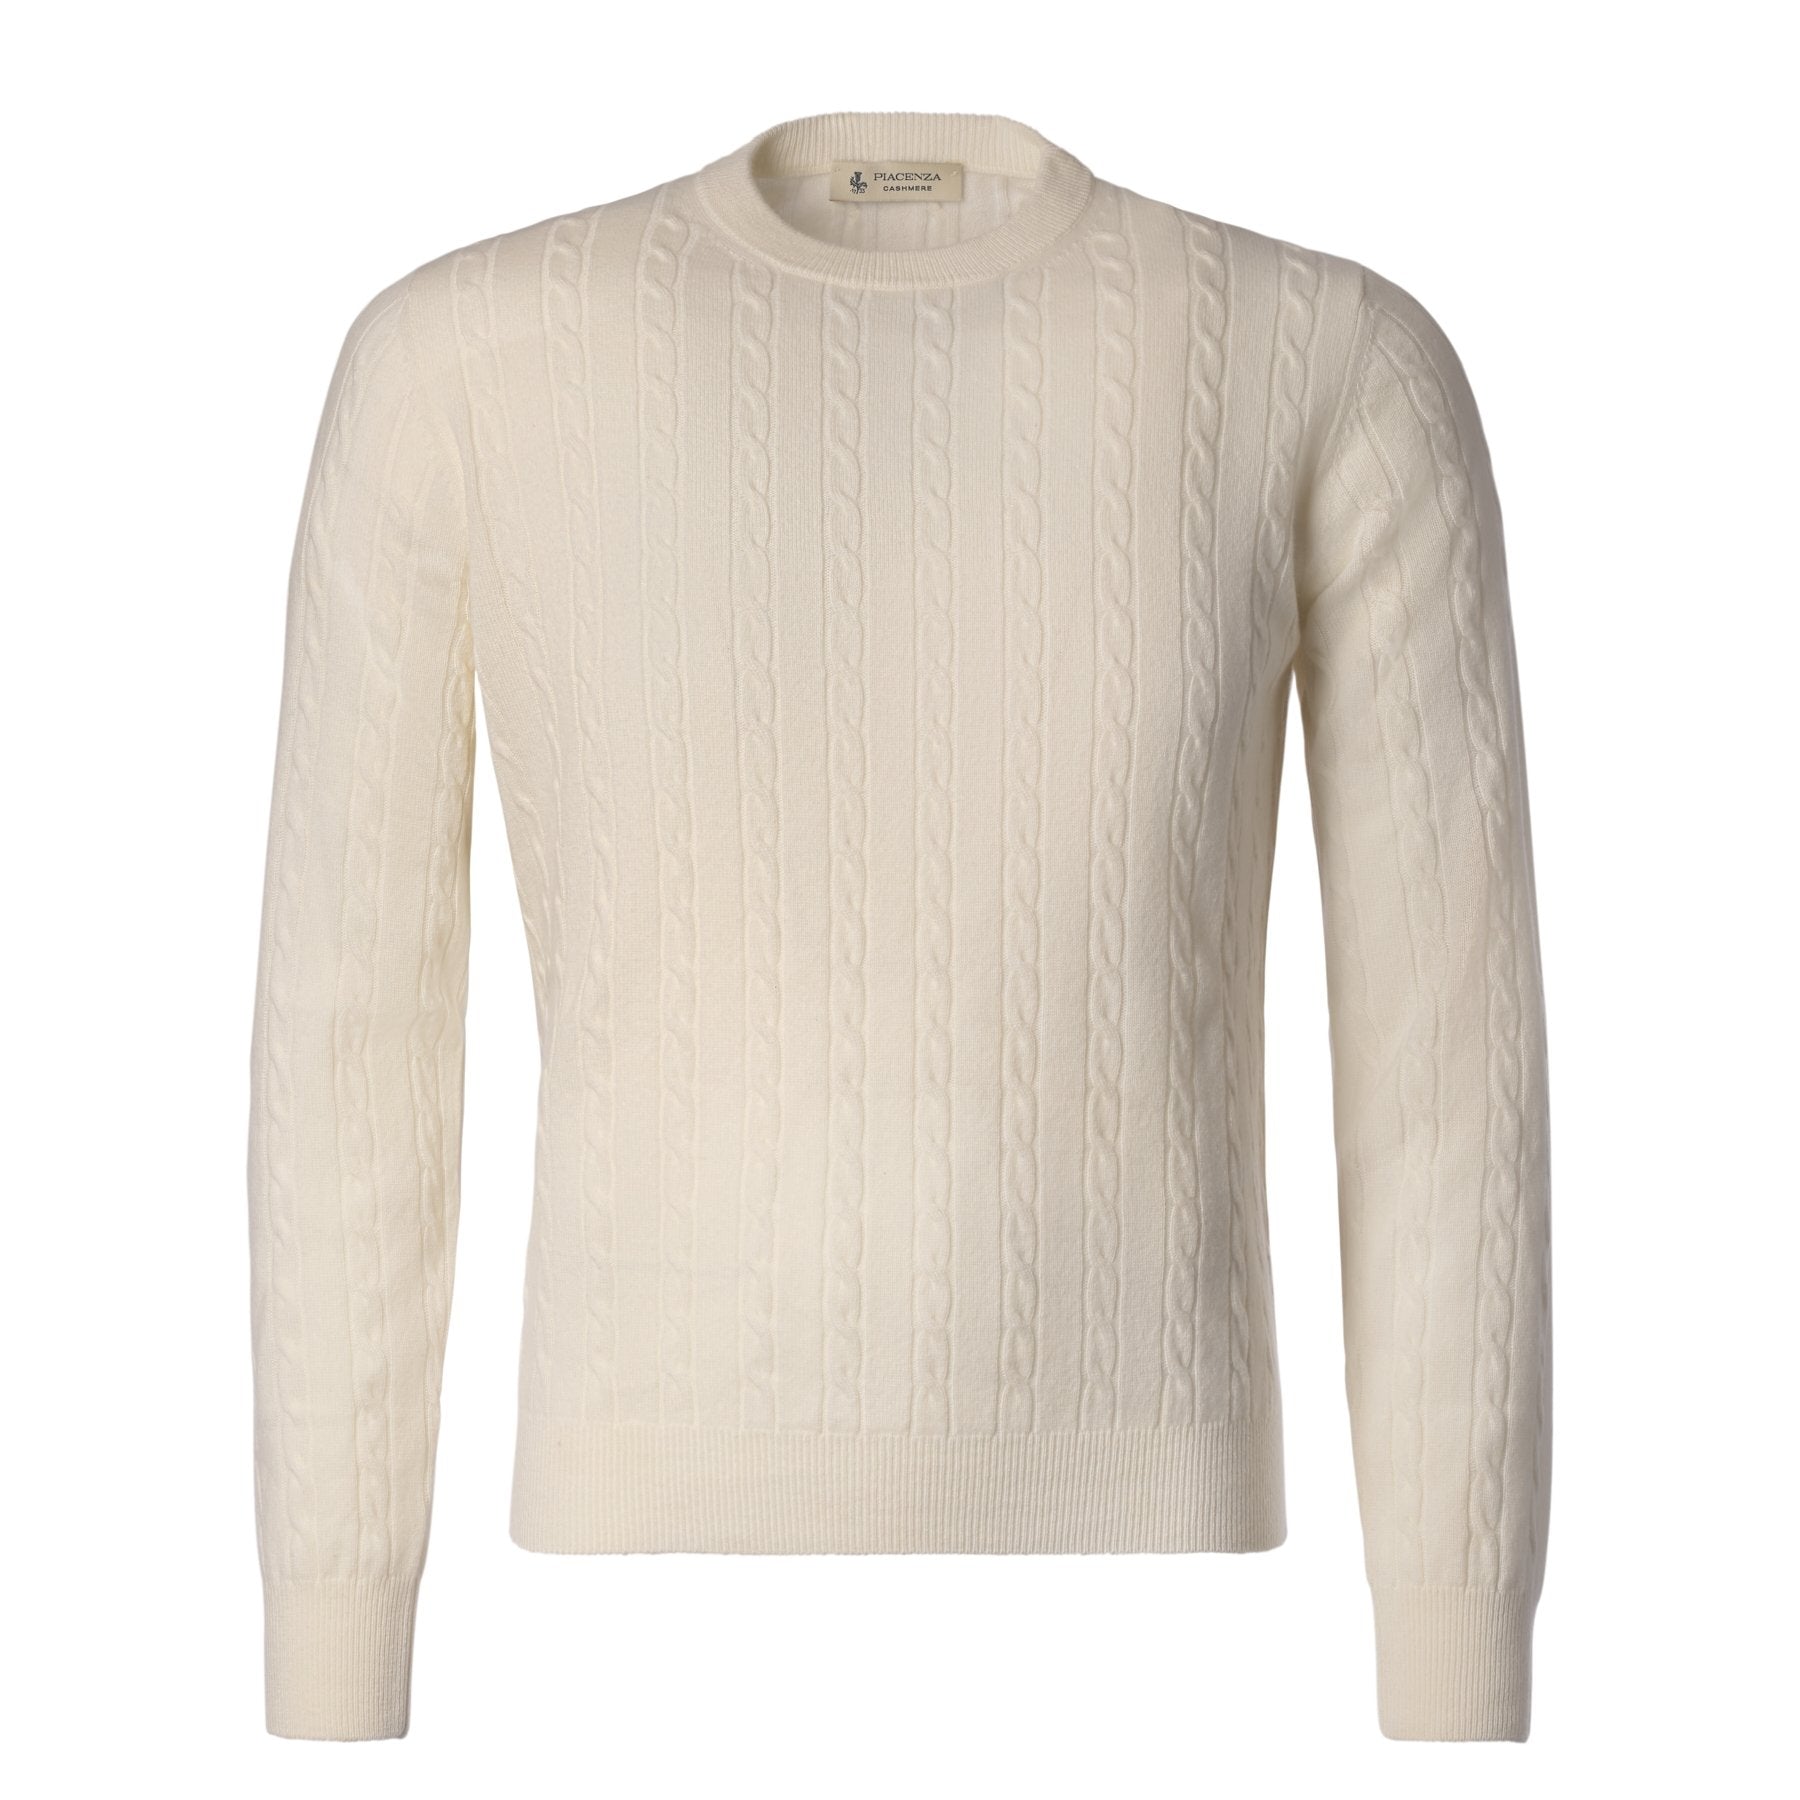 Piacenza Cashmere | Crew-Neck Cable-Knit Cashmere Sweater in White ...